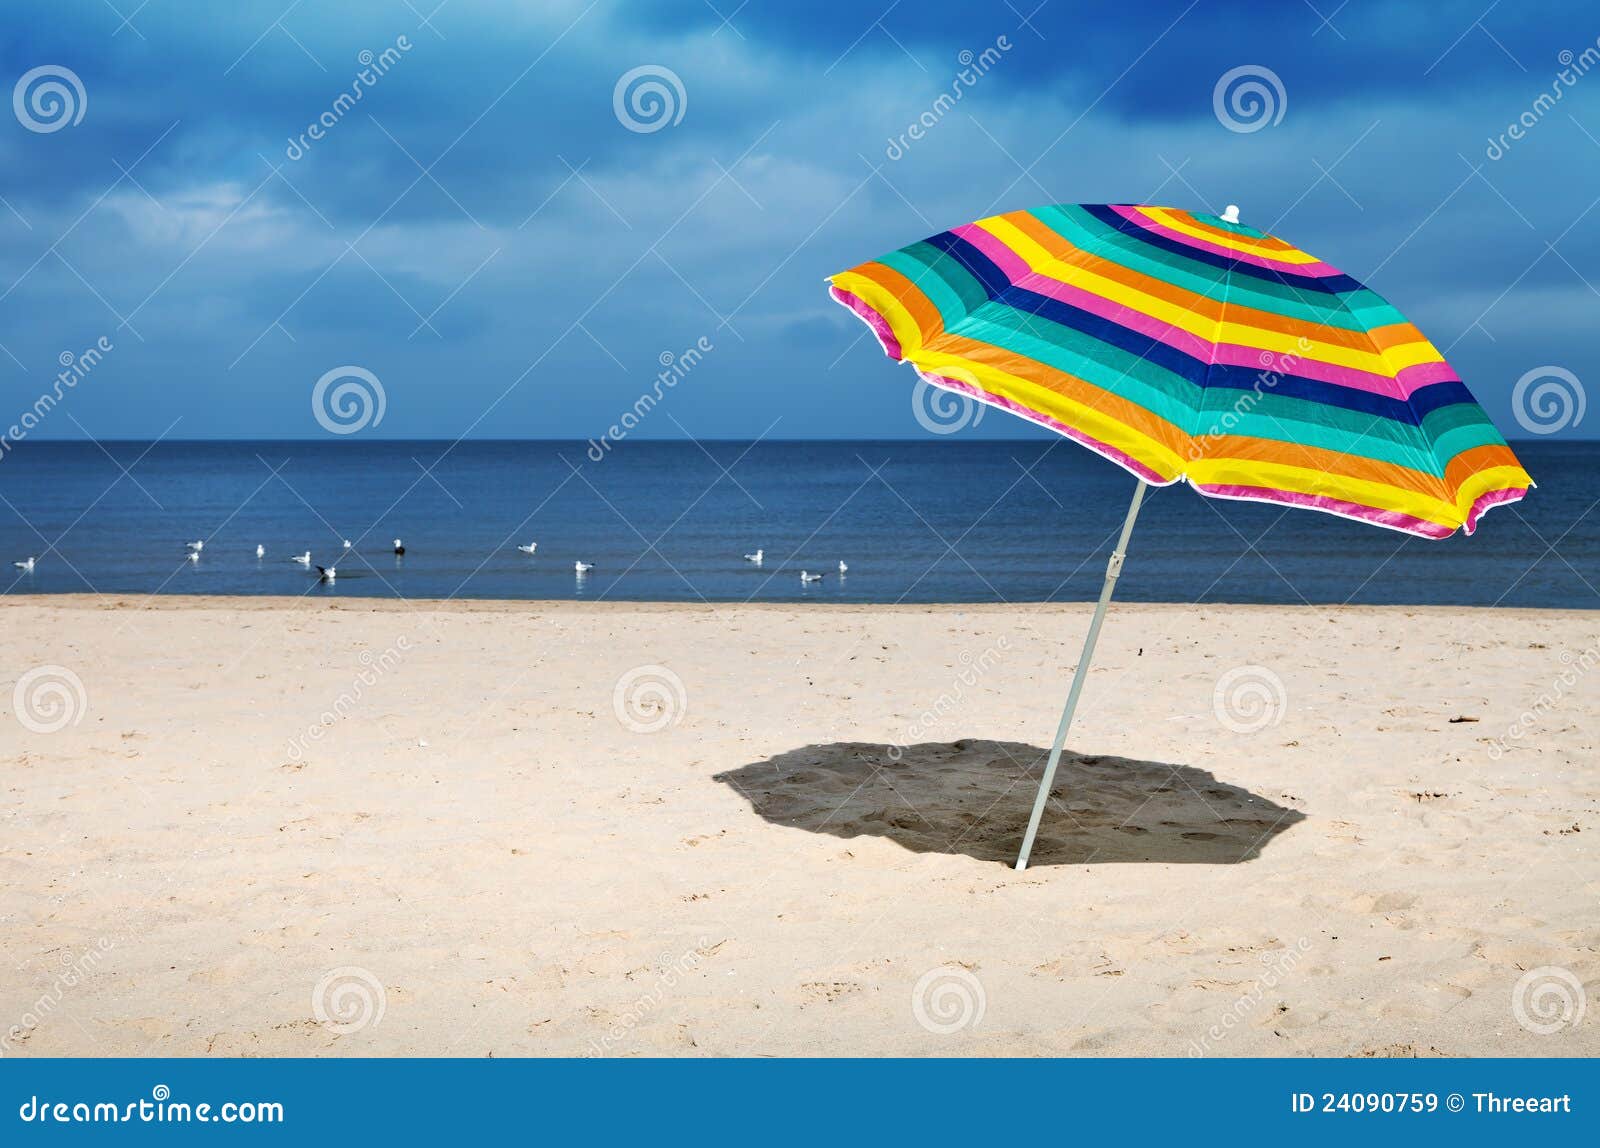 Beach Umbrella stock image. Image of colorful, holiday - 24090759